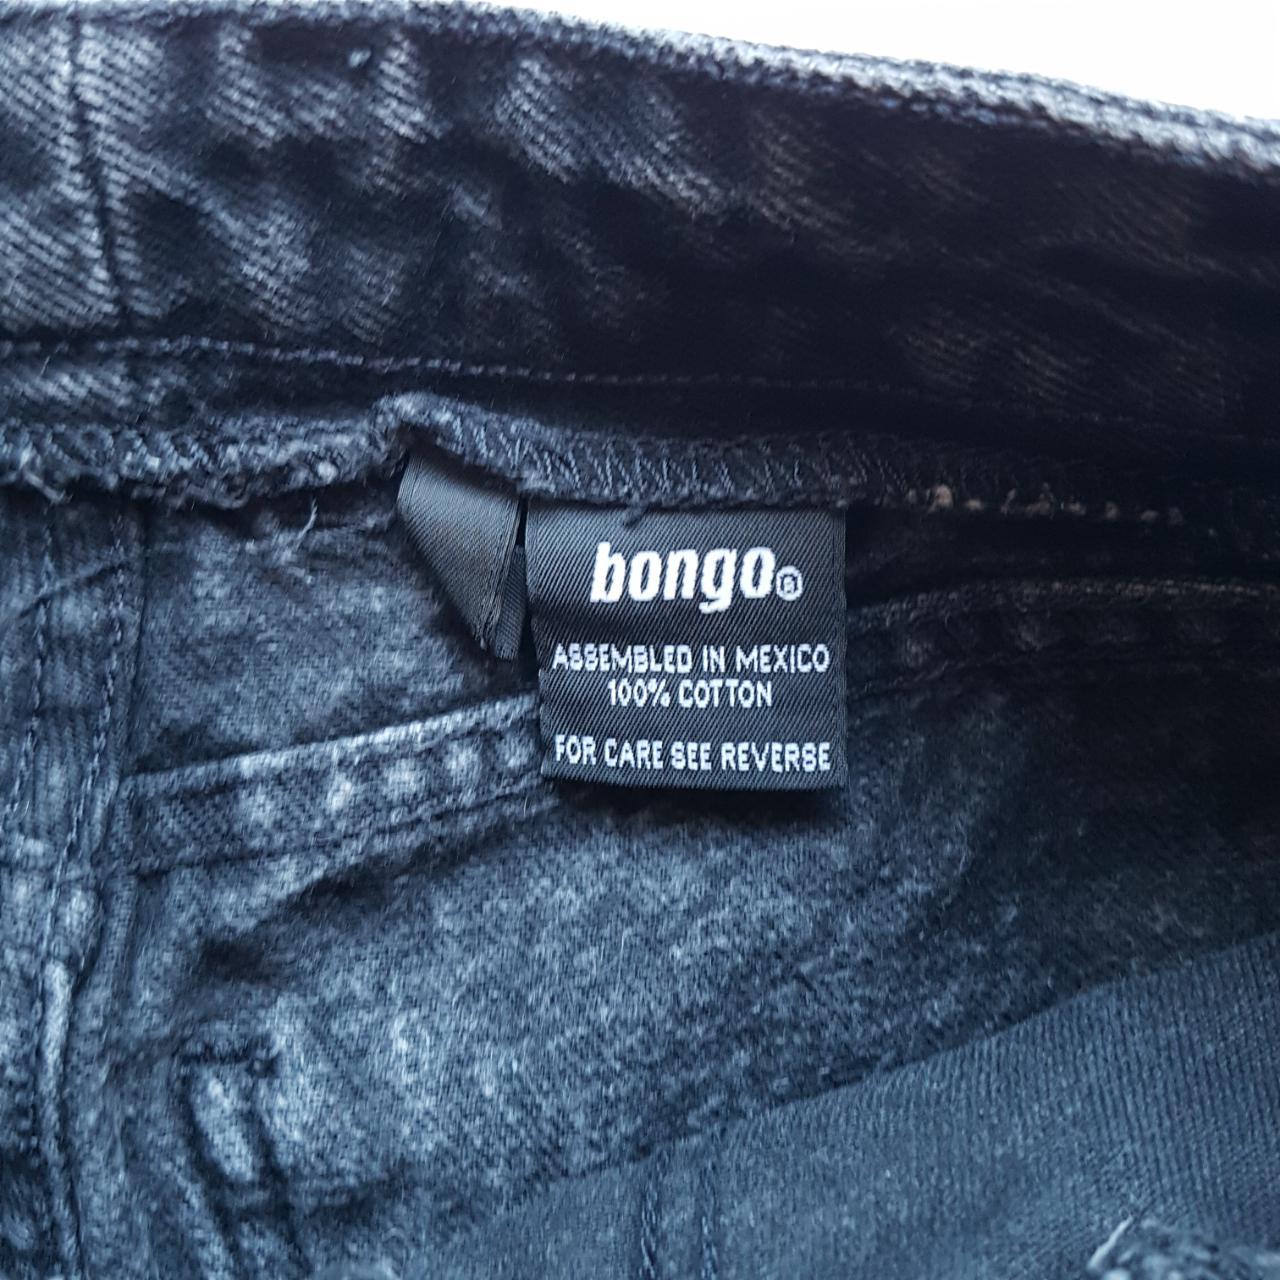 Product Image 2 - Vintage Bongo jeans in black